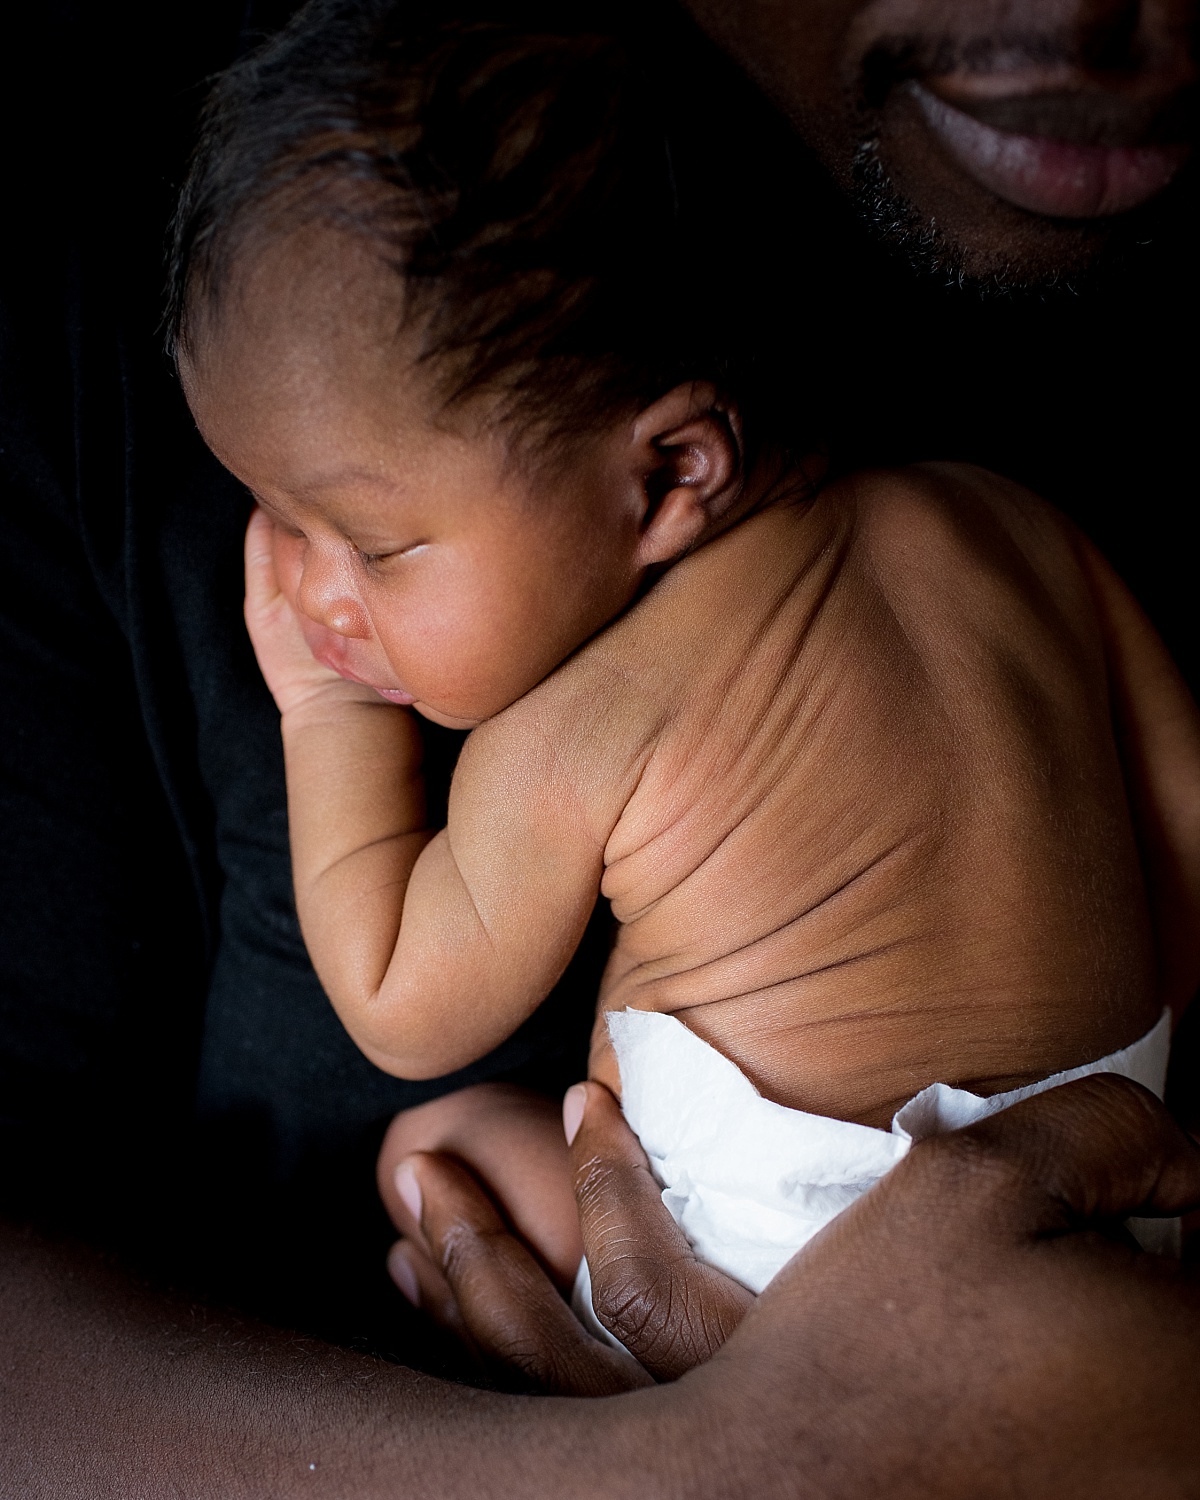 DC Newborn Photographer captures newborn at home in lifestyle newborn session